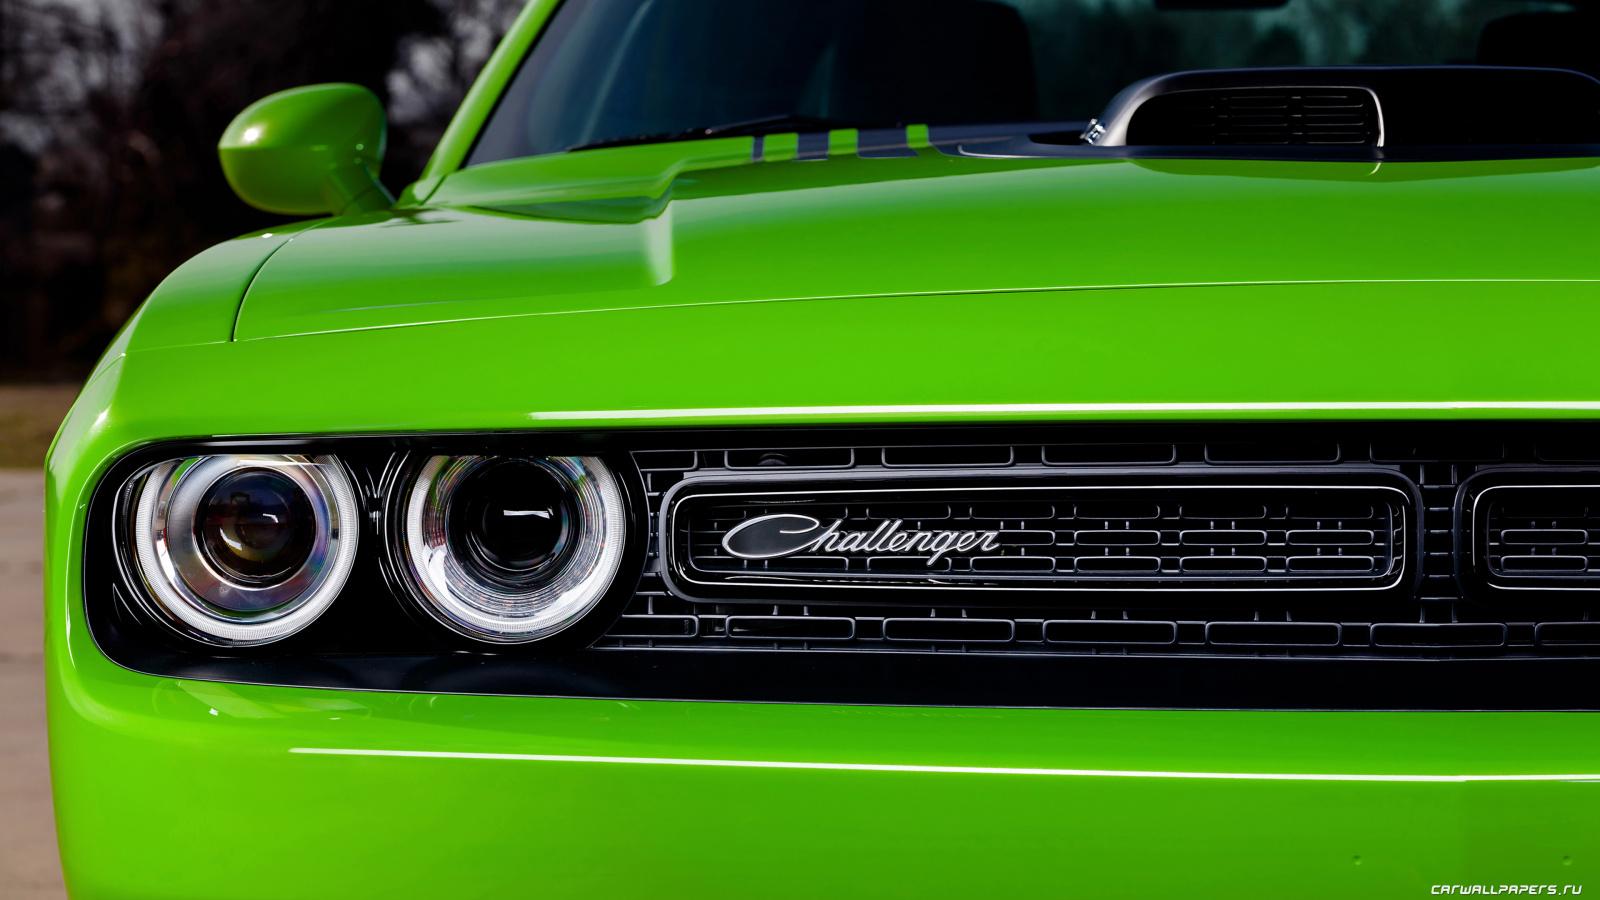 Dodge Charger b Body, Automotive Exterior, Dodge Challenger, Classic